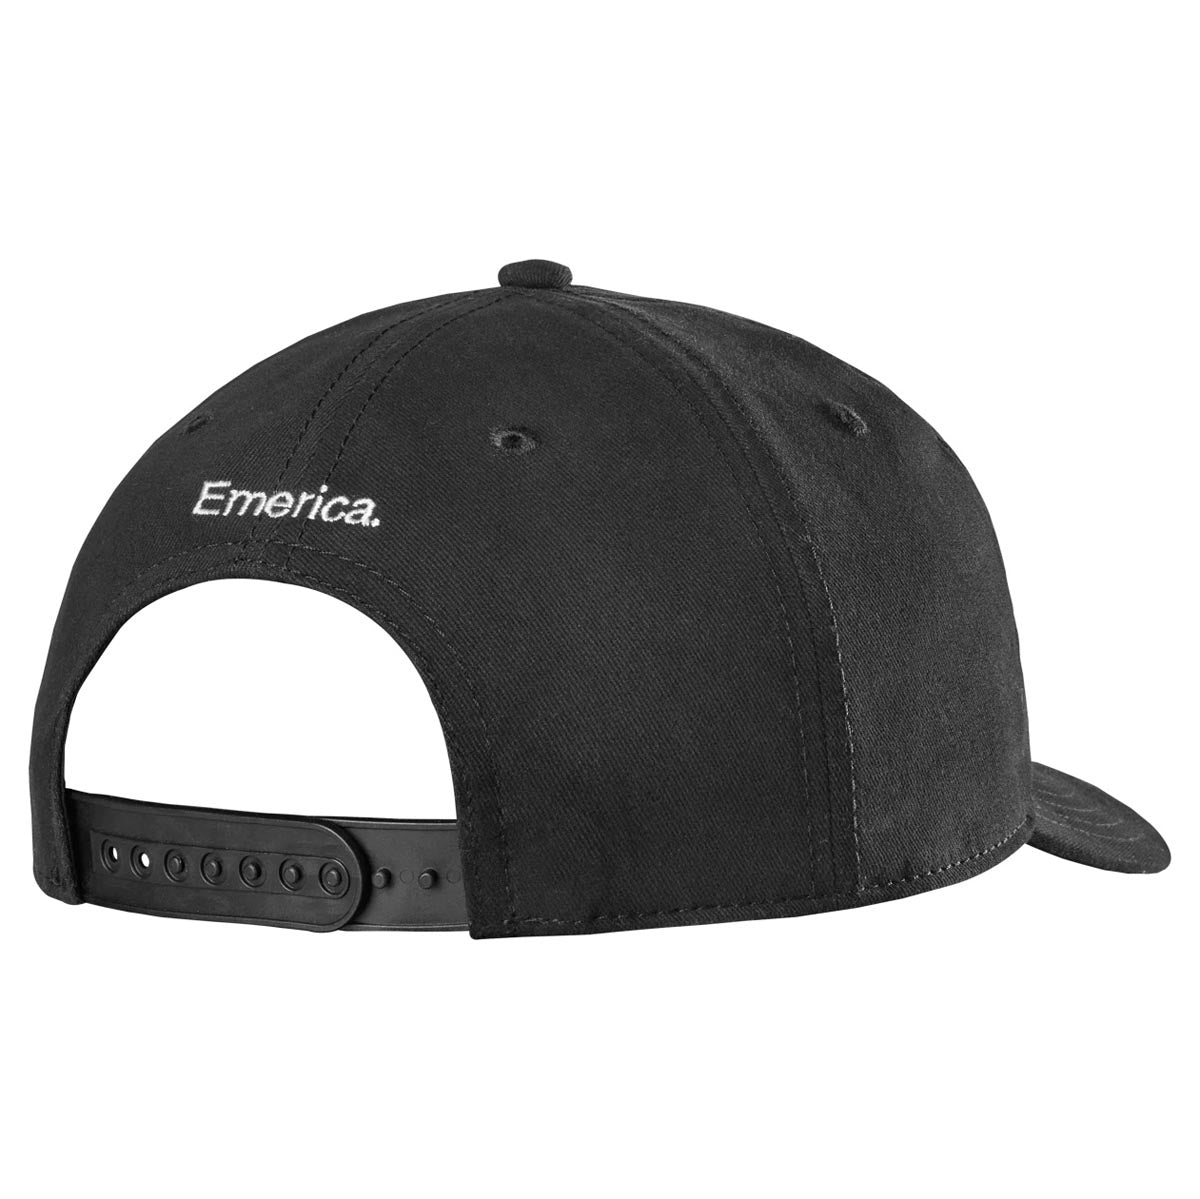 Emerica 6 Feet Above Snapback Hat - Black image 2